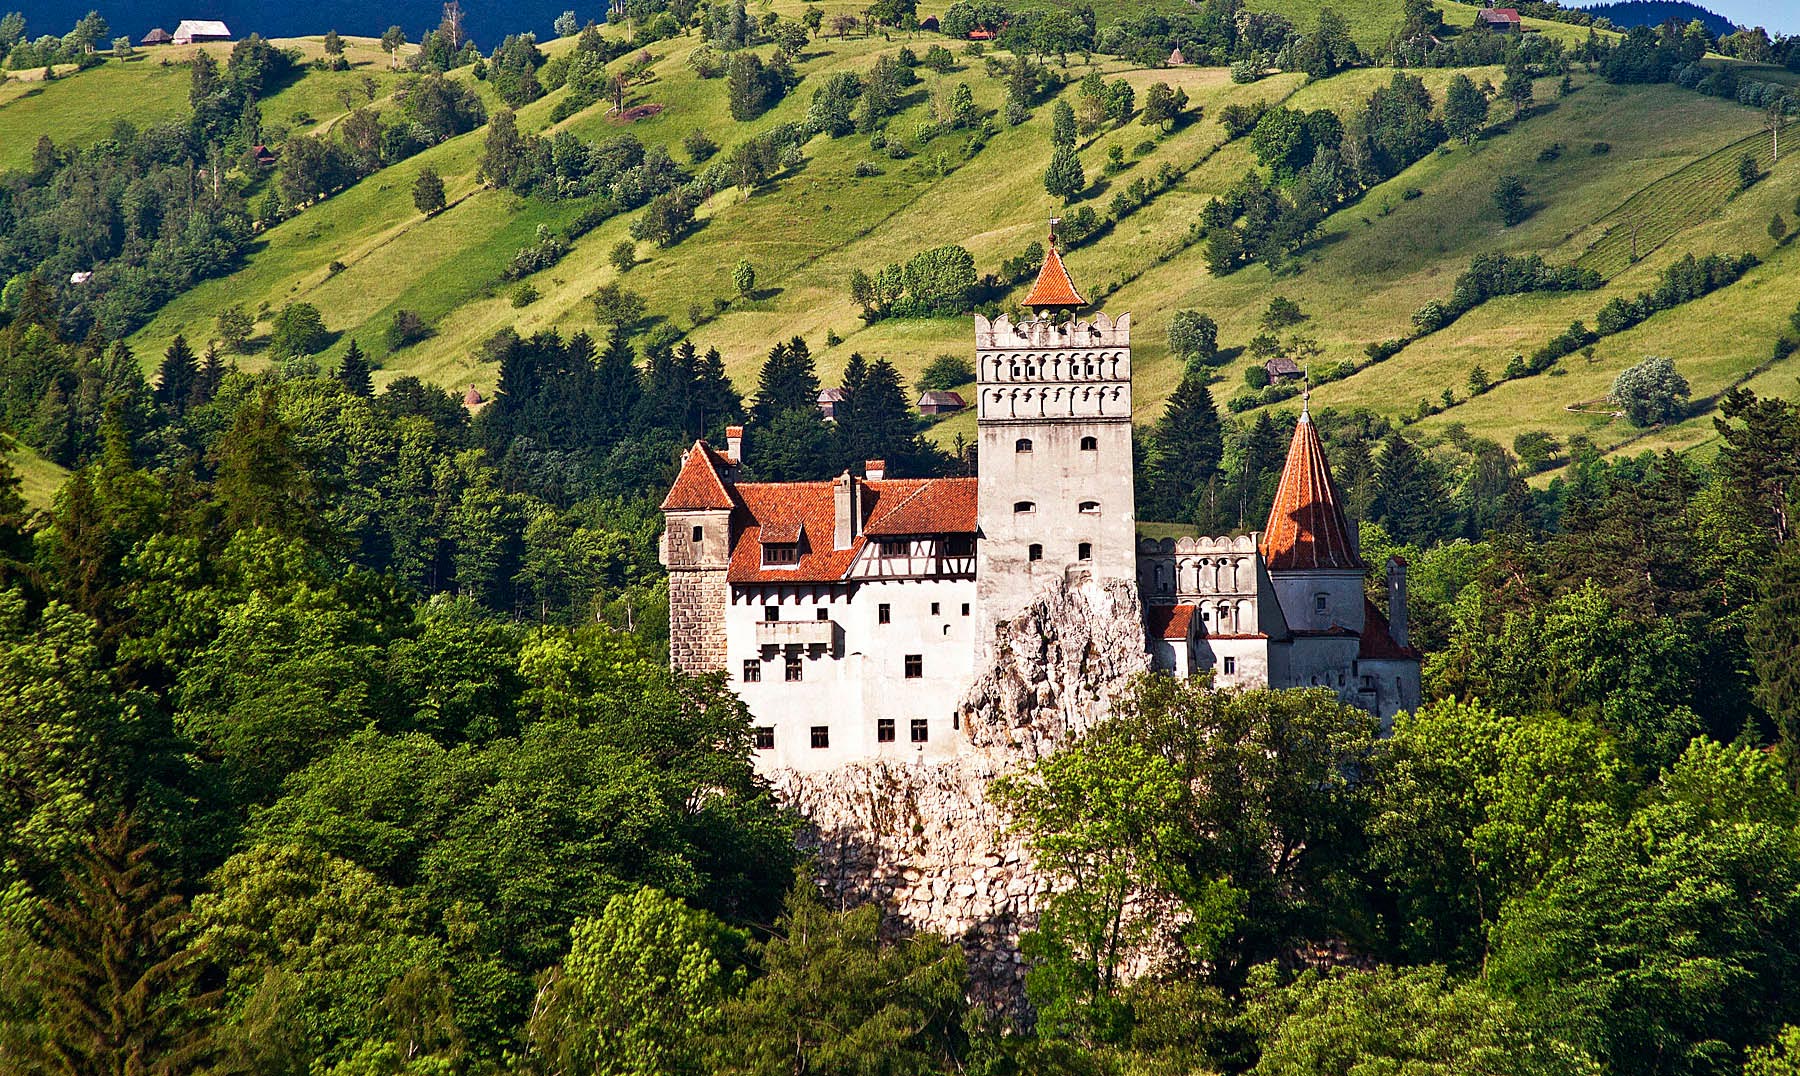 Location, location, location: the castle is nestled in amazing greenery. Image: rolandia.eu